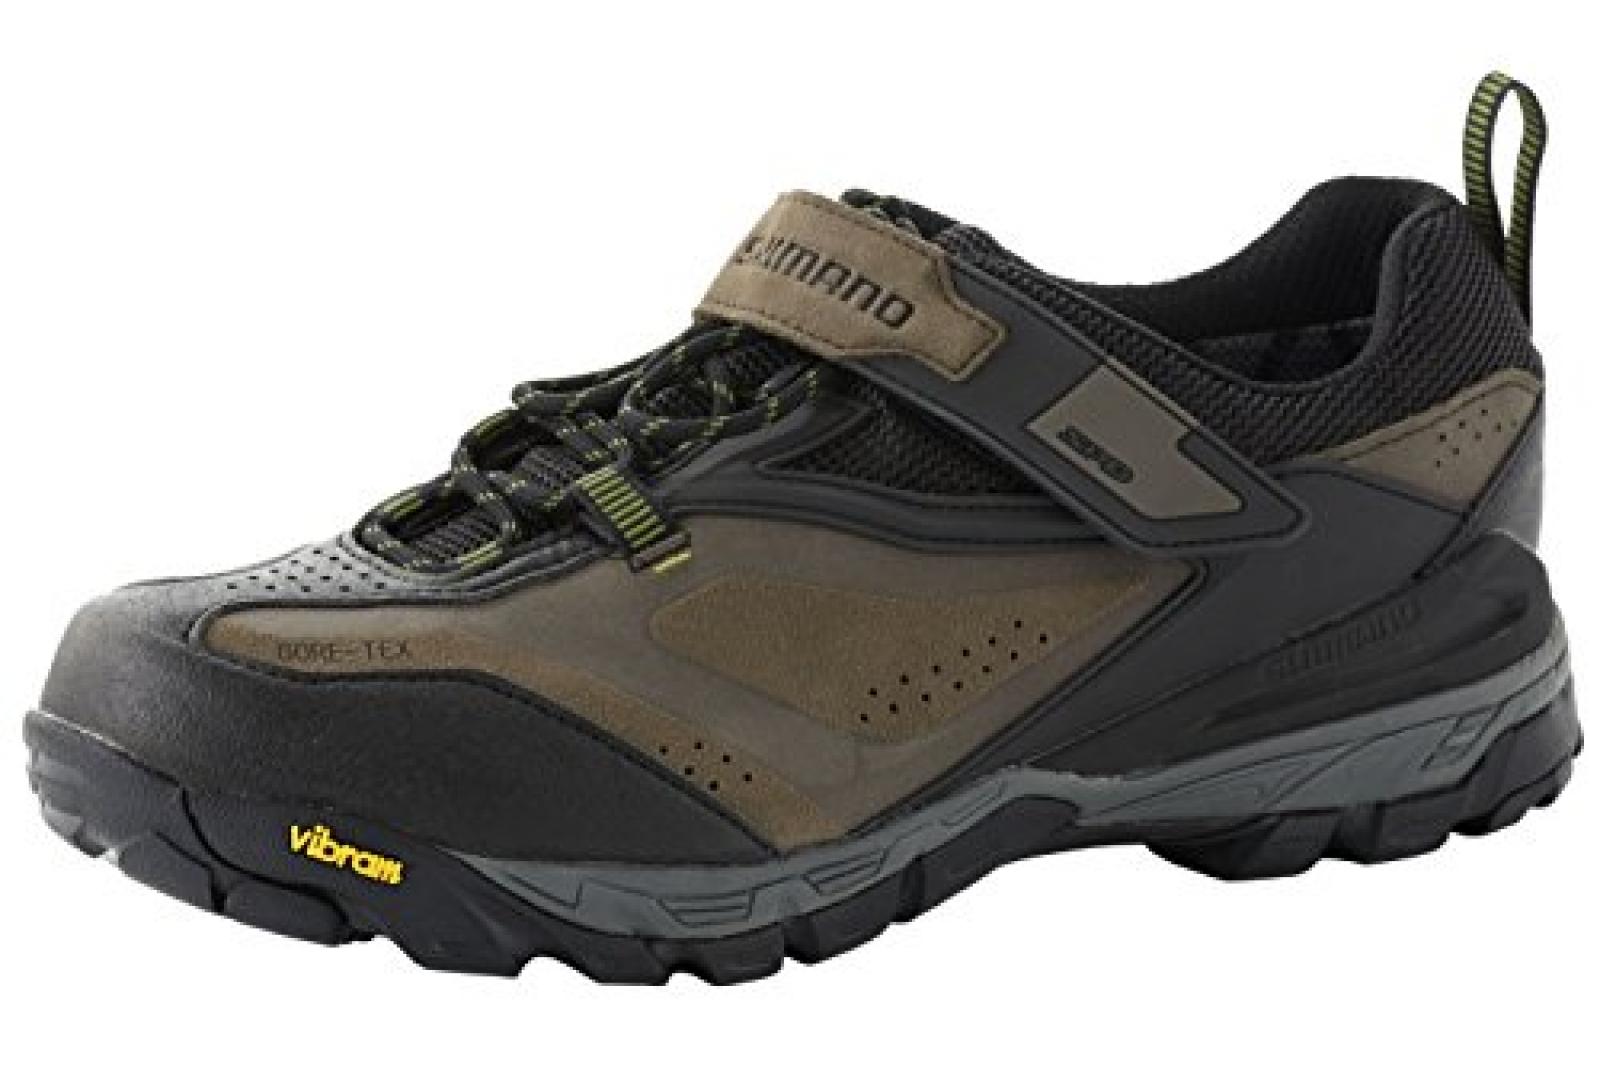 Shimano SH-MT71 Schuhe men black/brown Größe 45 2015 